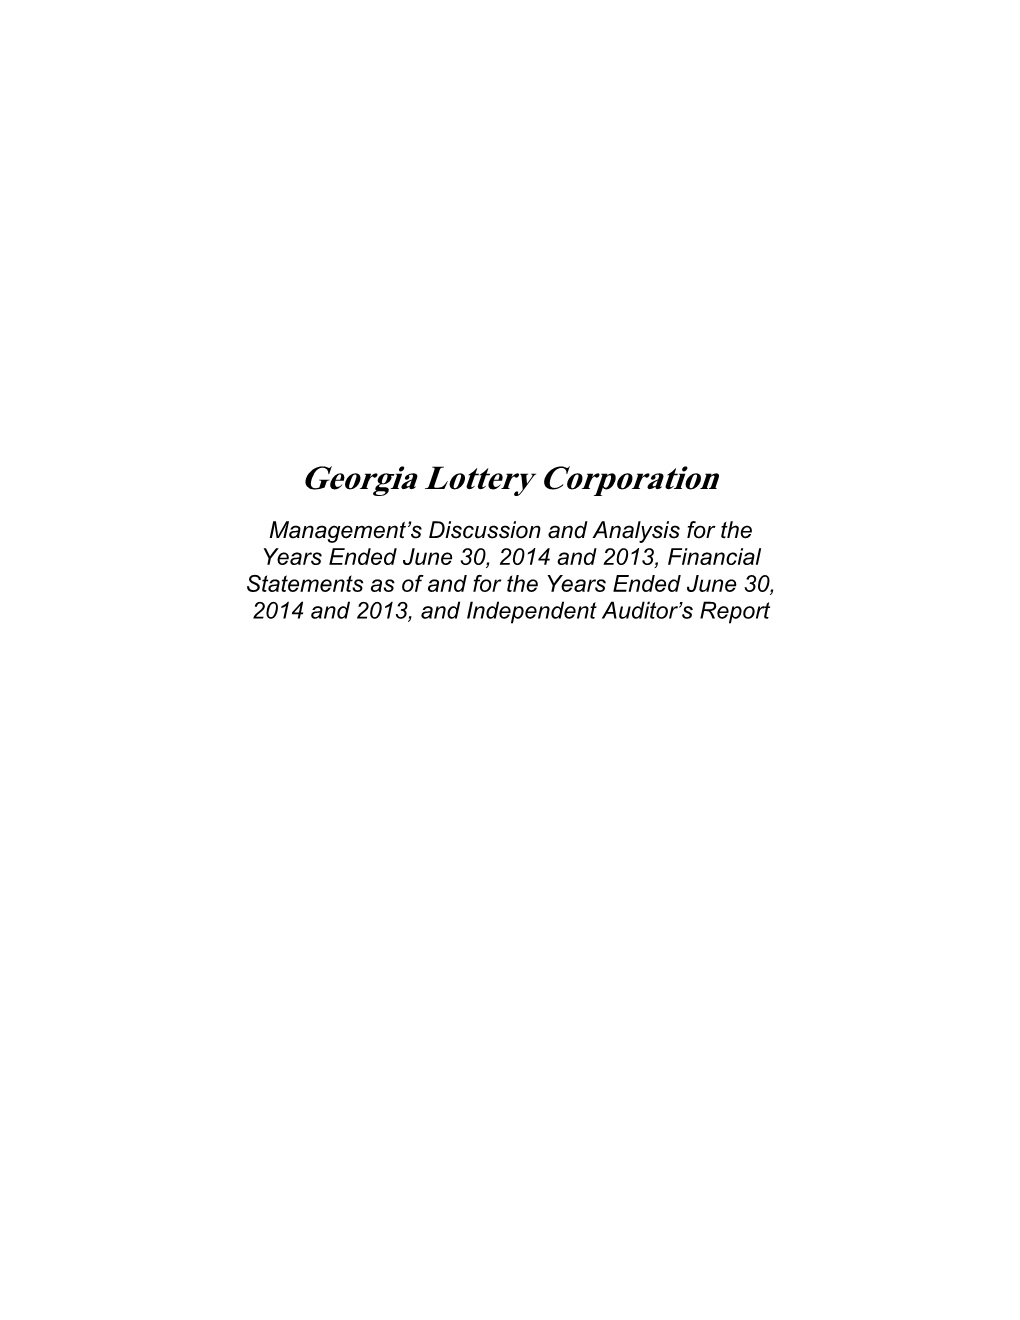 Georgia Lottery 2014 Financial Statements